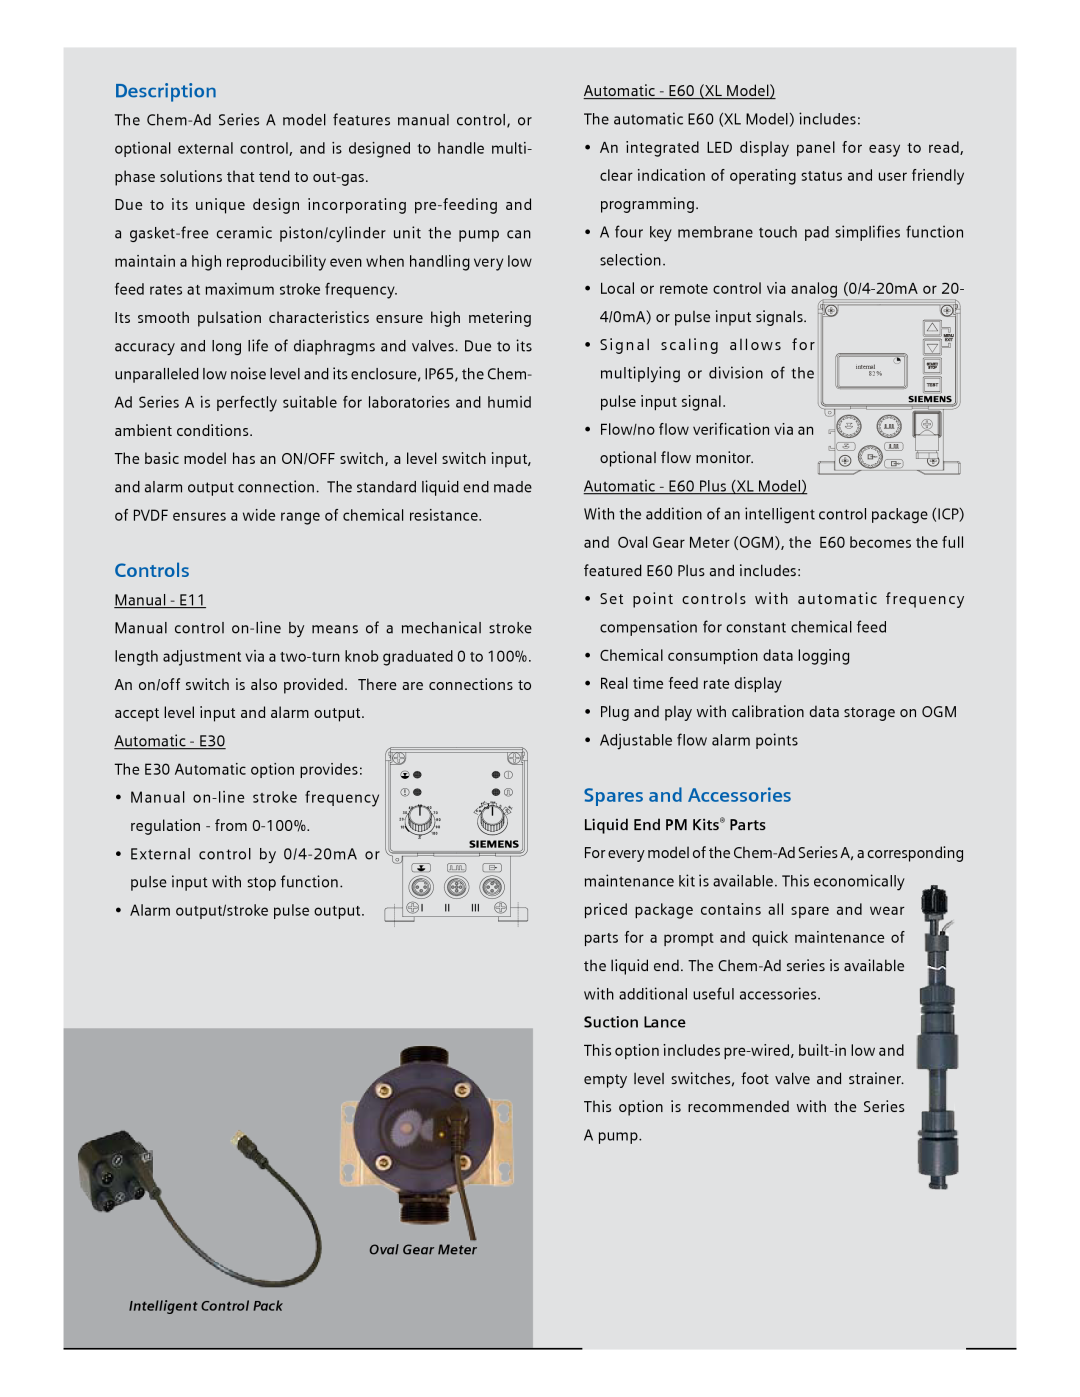 Siemens Chem-Ad Series manual Description, Controls, Spares and Accessories, Liquid End PM Kits Parts, Suction Lance 